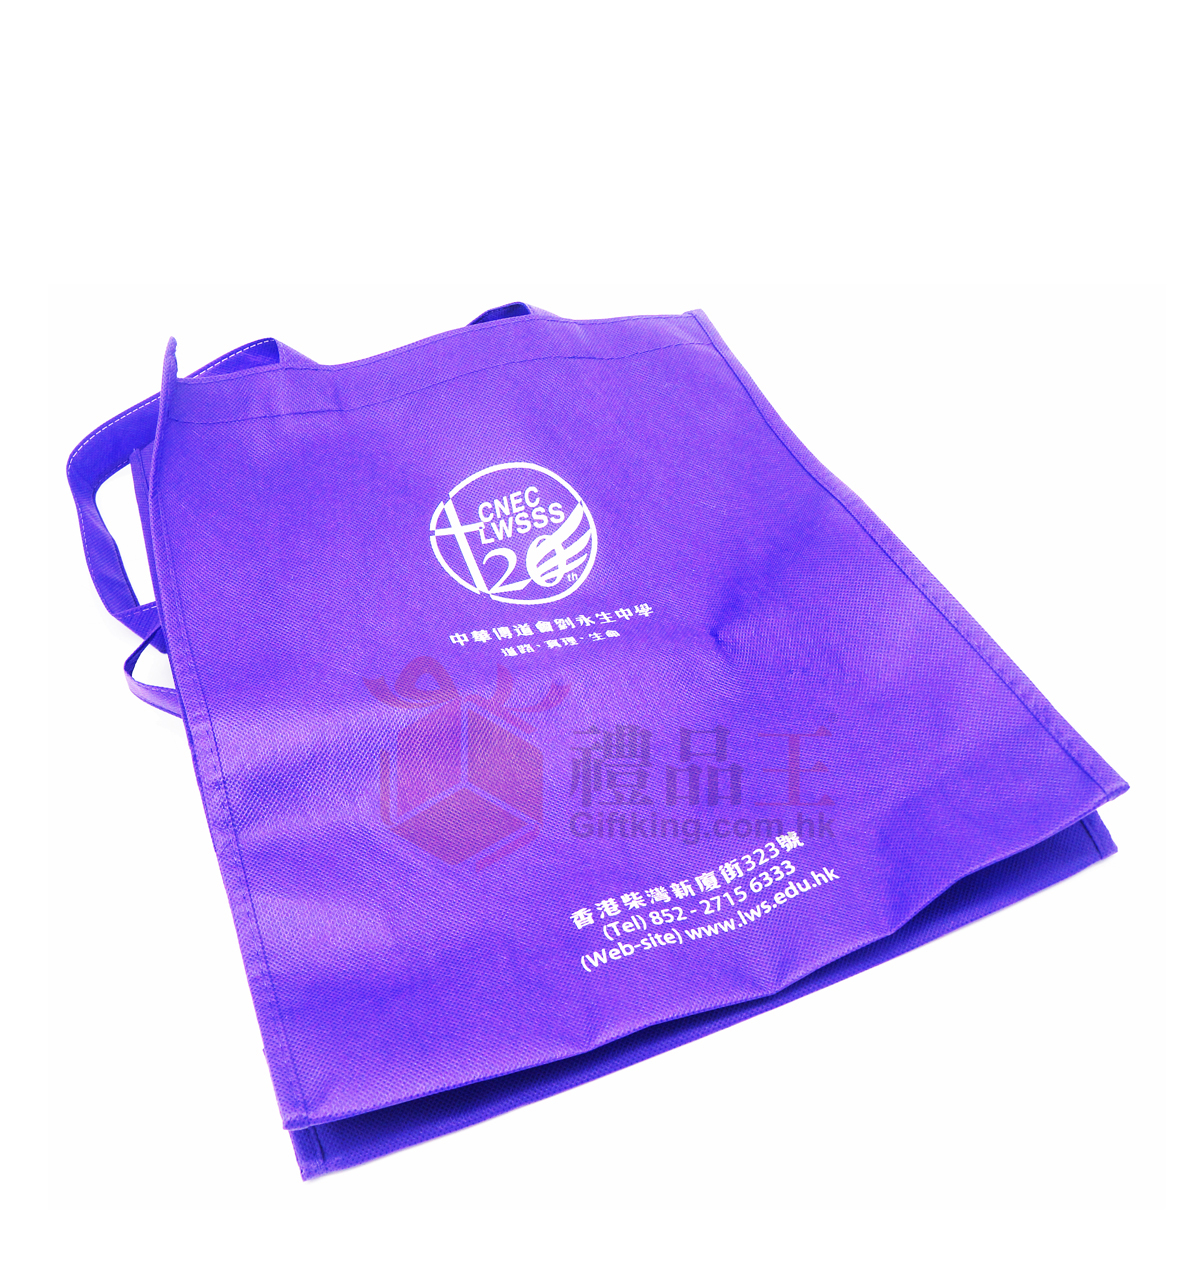 CNEC LWSSS shopping bag (Advertising gift)